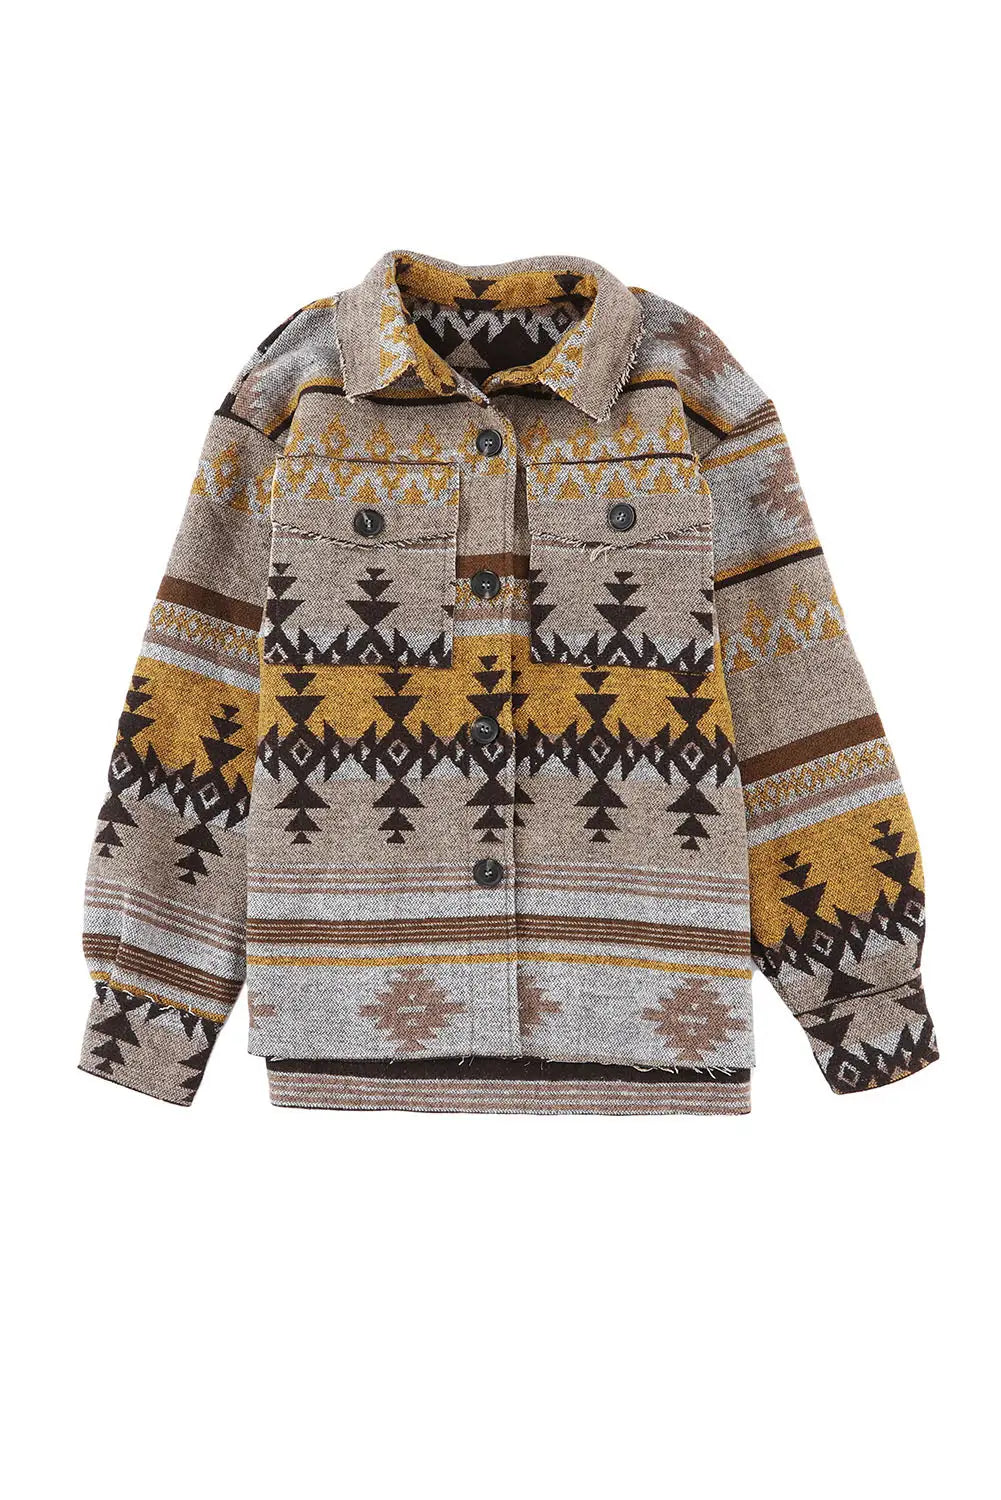 Brown western aztec print jacket - shackets